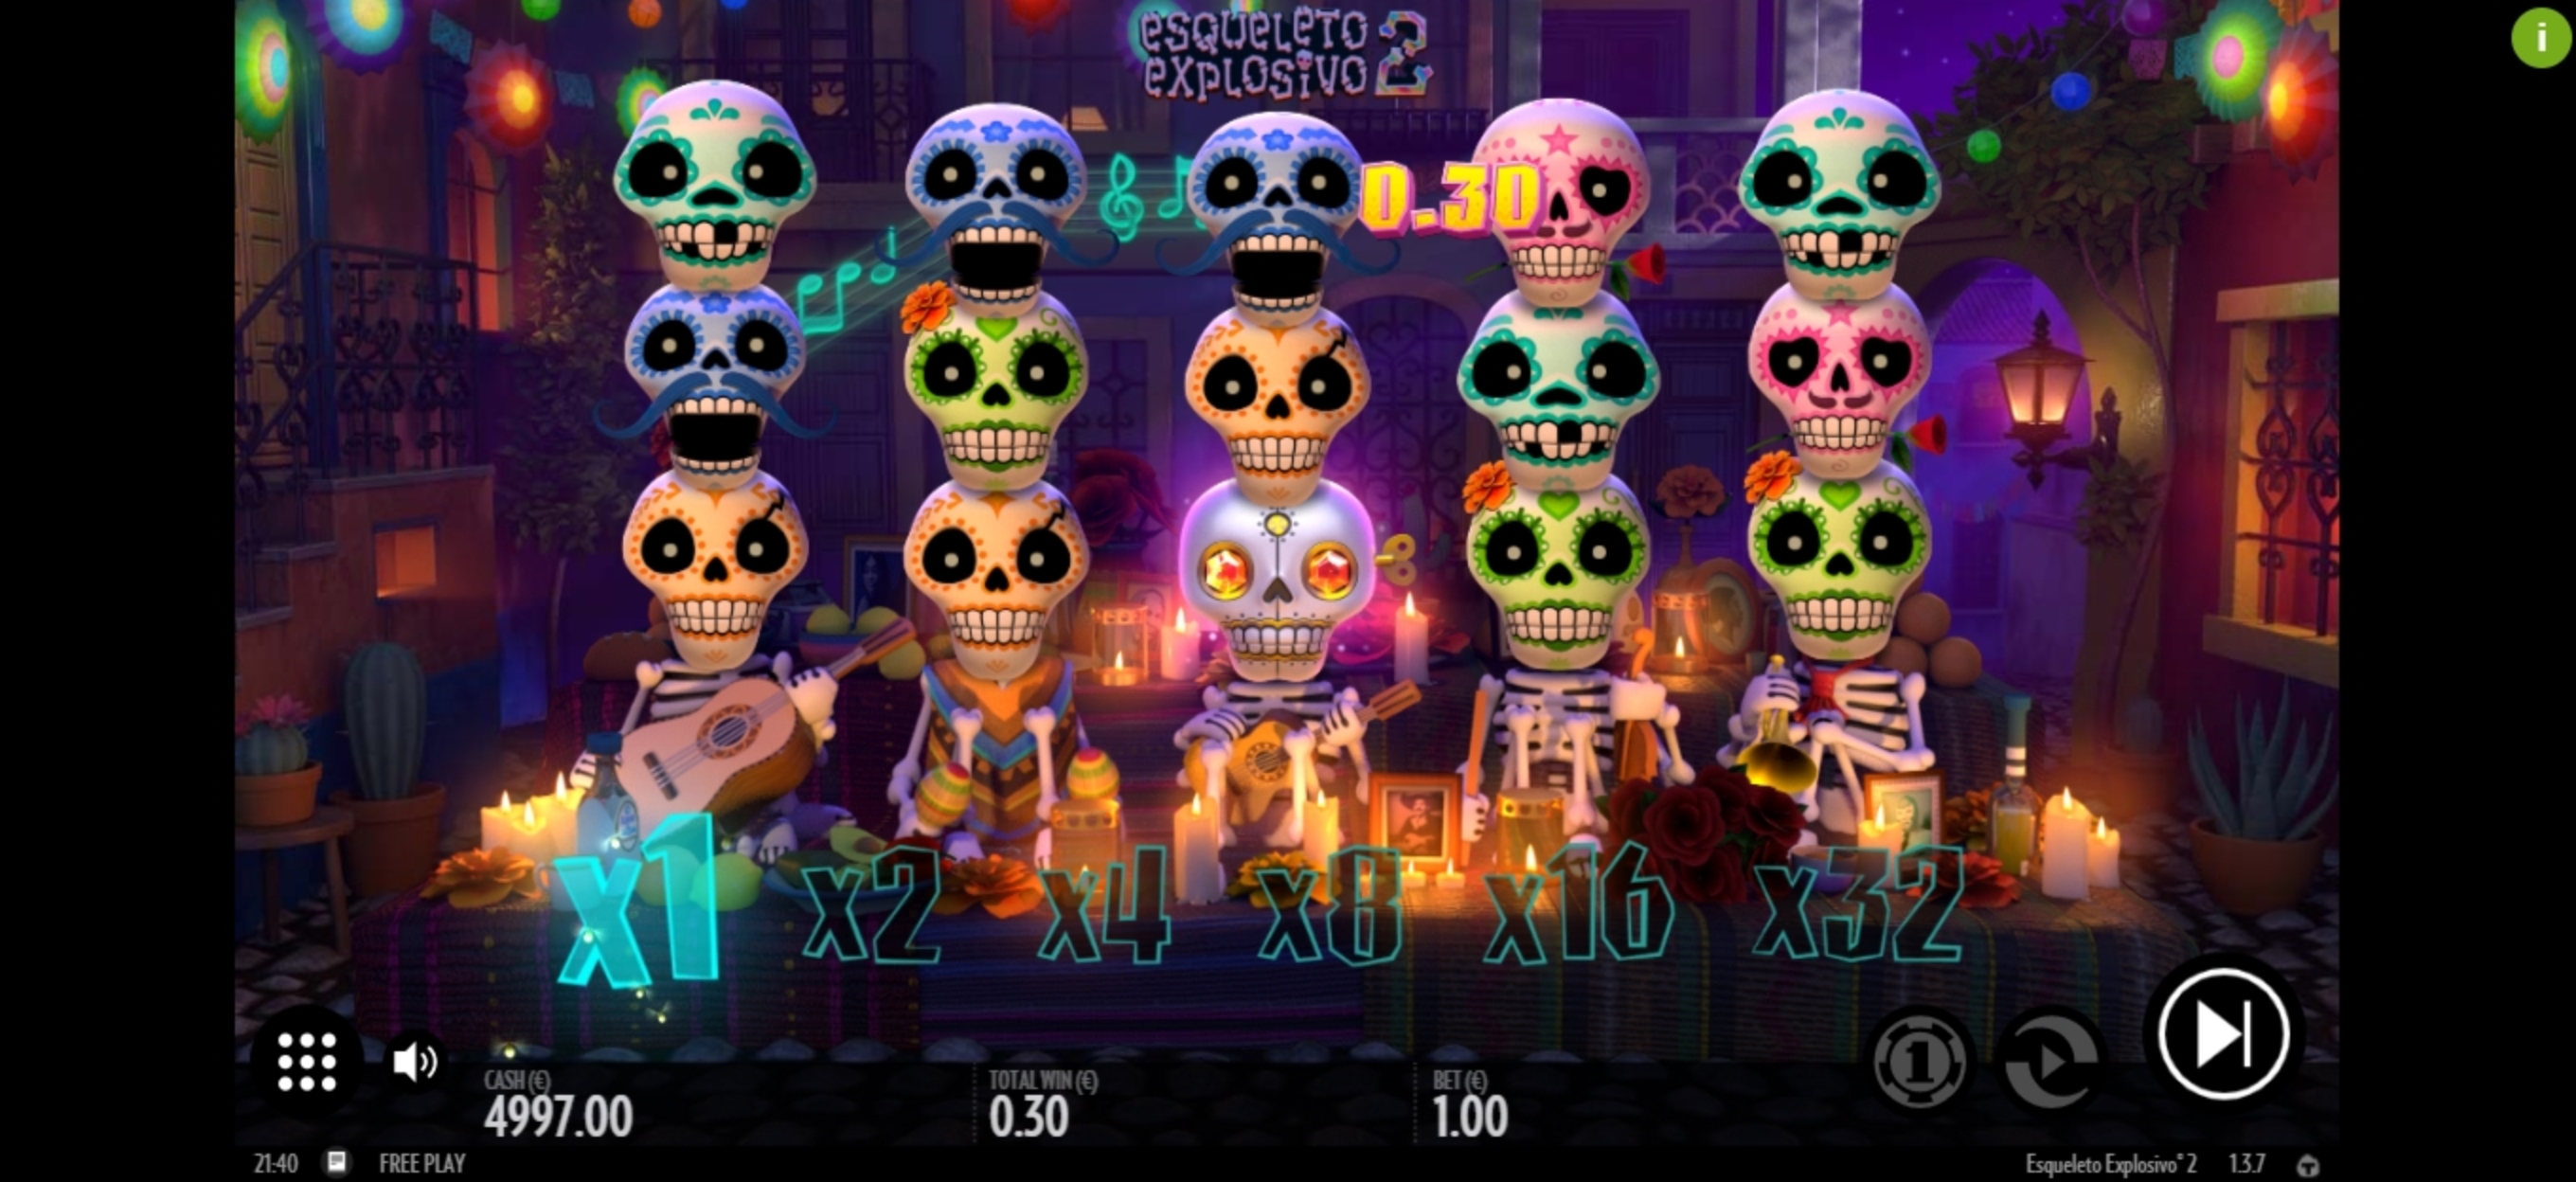 Win Money in Esqueleto Explosivo 2 Free Slot Game by Thunderkick